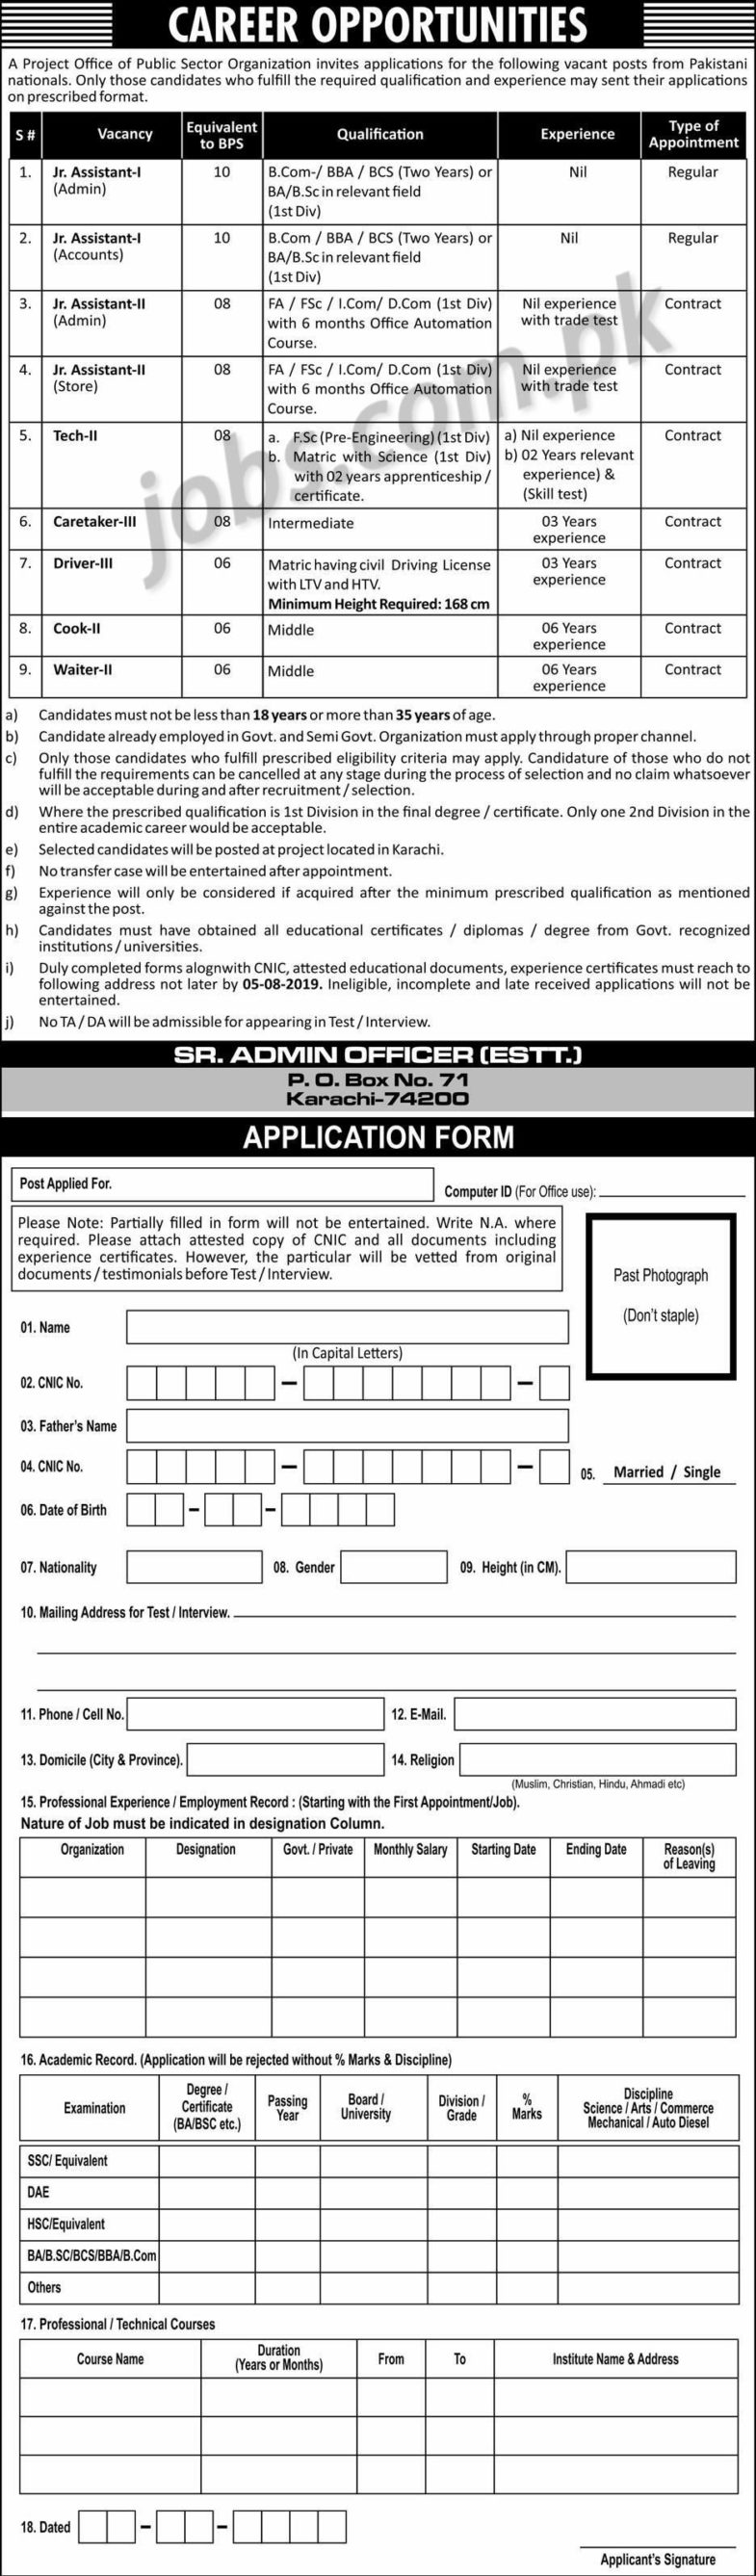 PO Box 74200 Public Sector Organization Jobs 2019 for Admin, Accounts, Jr Assistant-I/II, Tech-II, Caretaker-II & Other